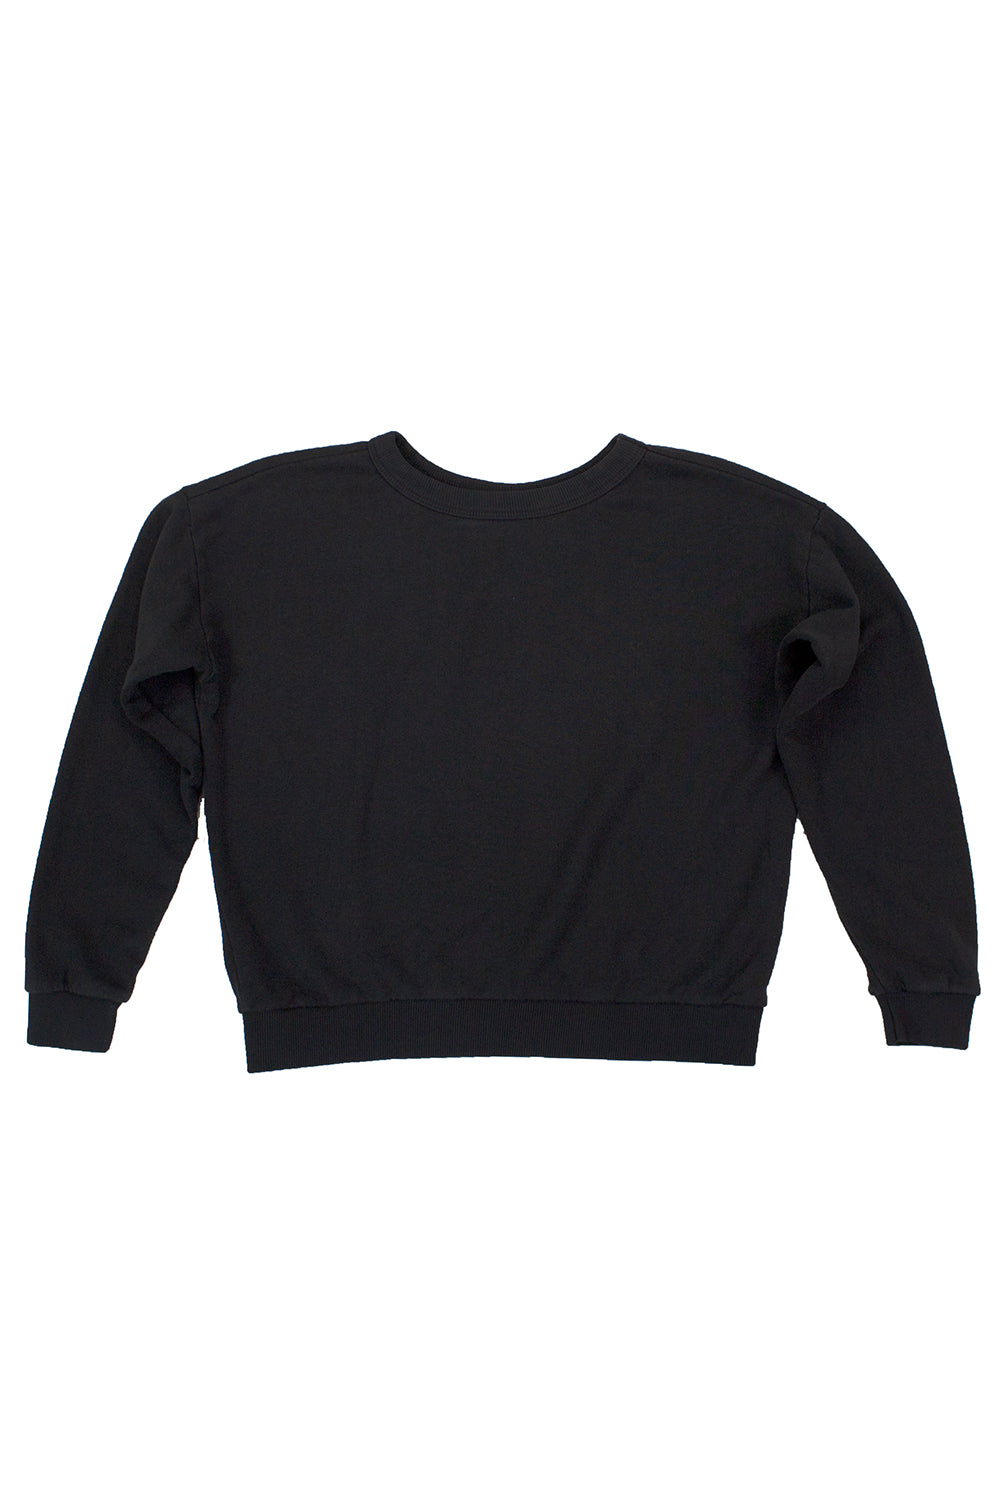 Laguna Cropped Sweatshirt | Jungmaven Hemp Clothing & Accessories / Color: Black